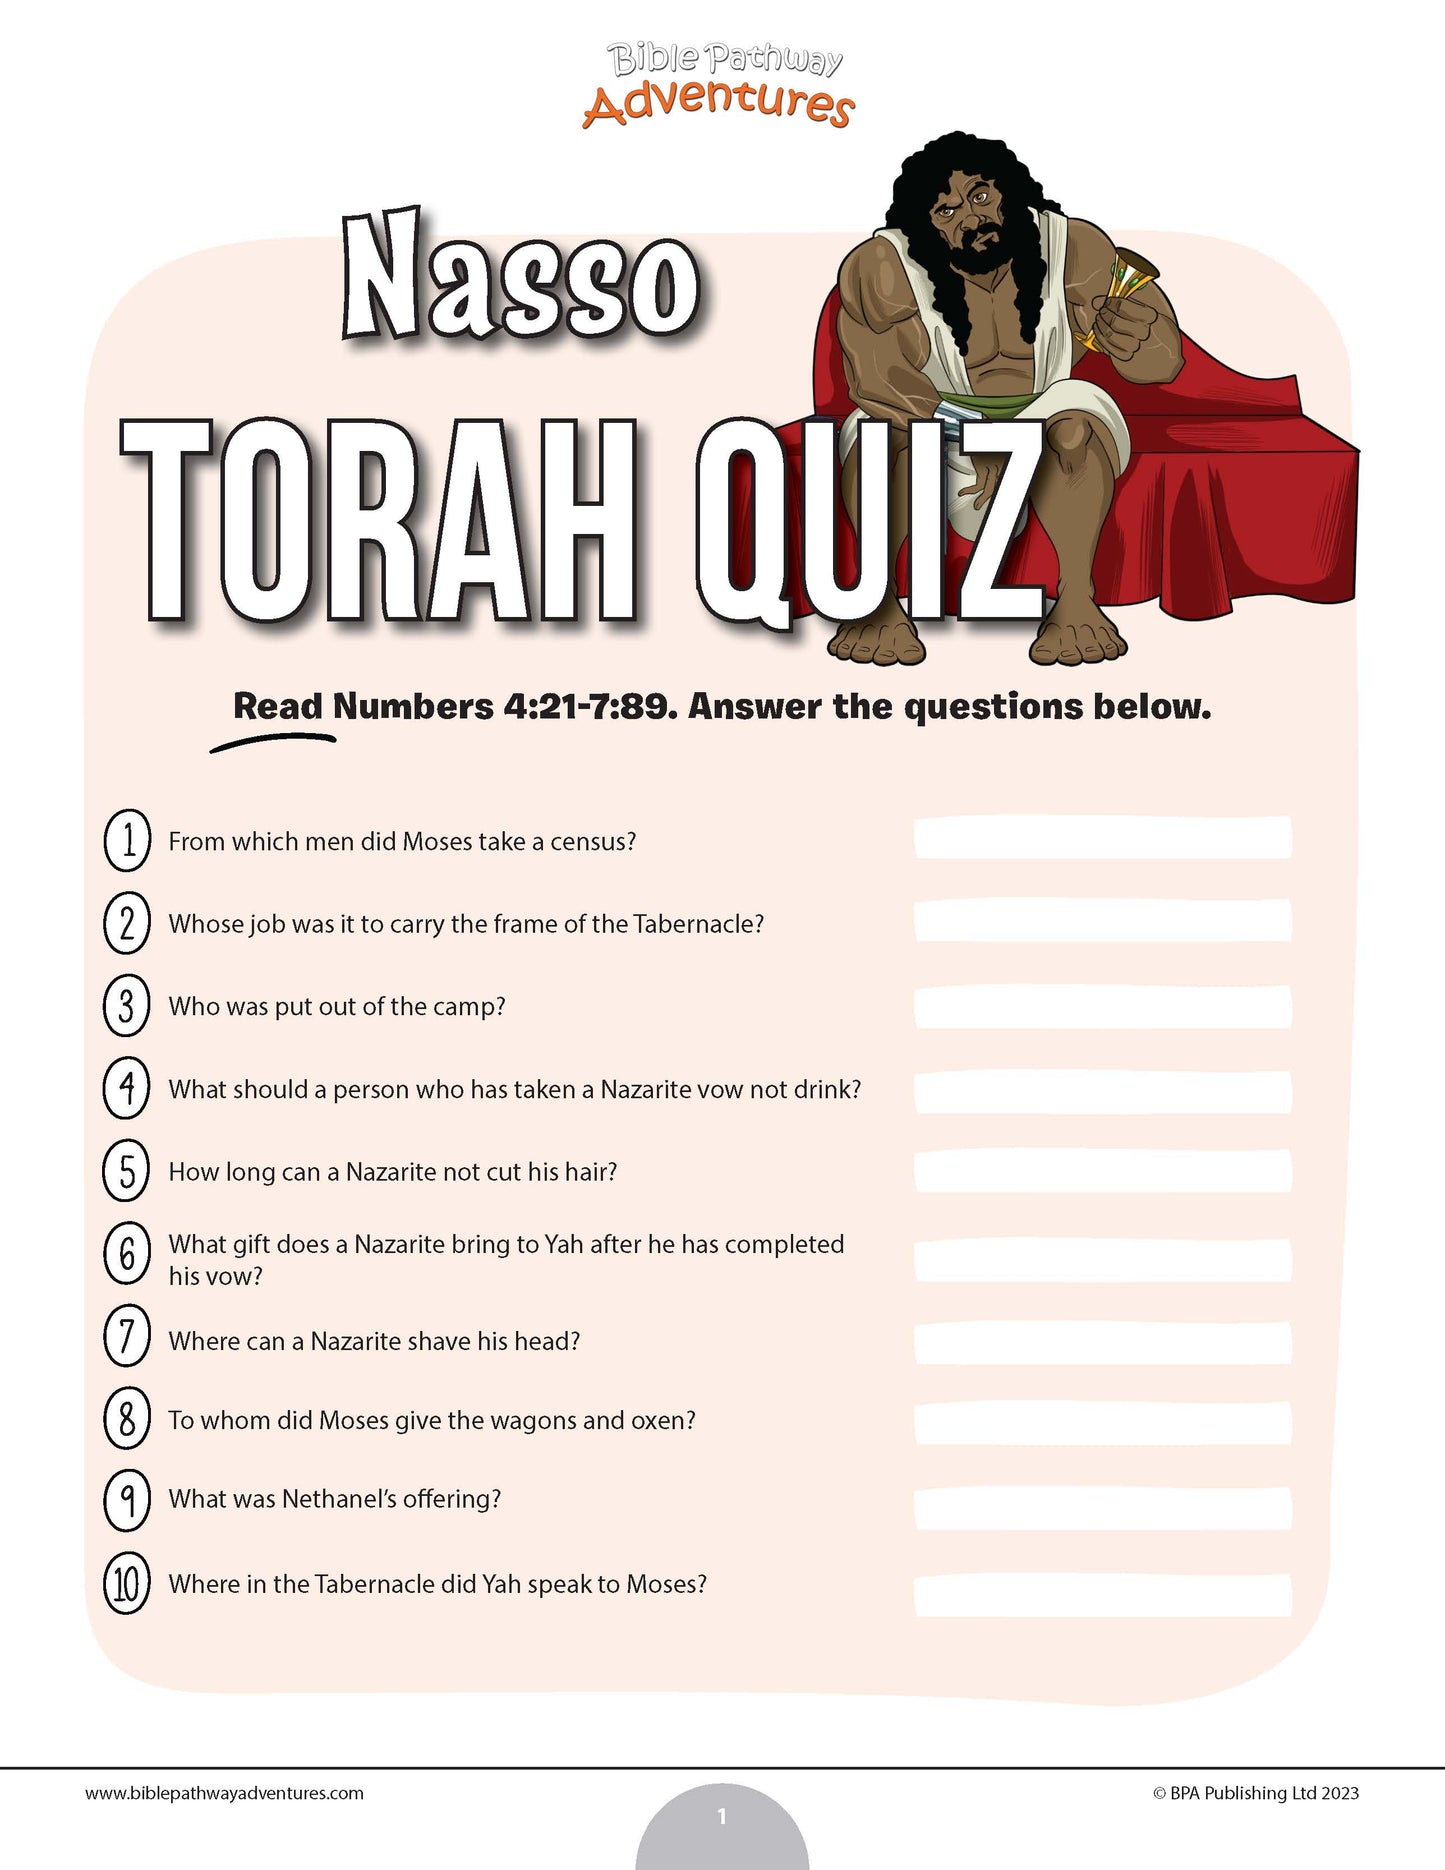 Nasso Torah quiz (PDF)